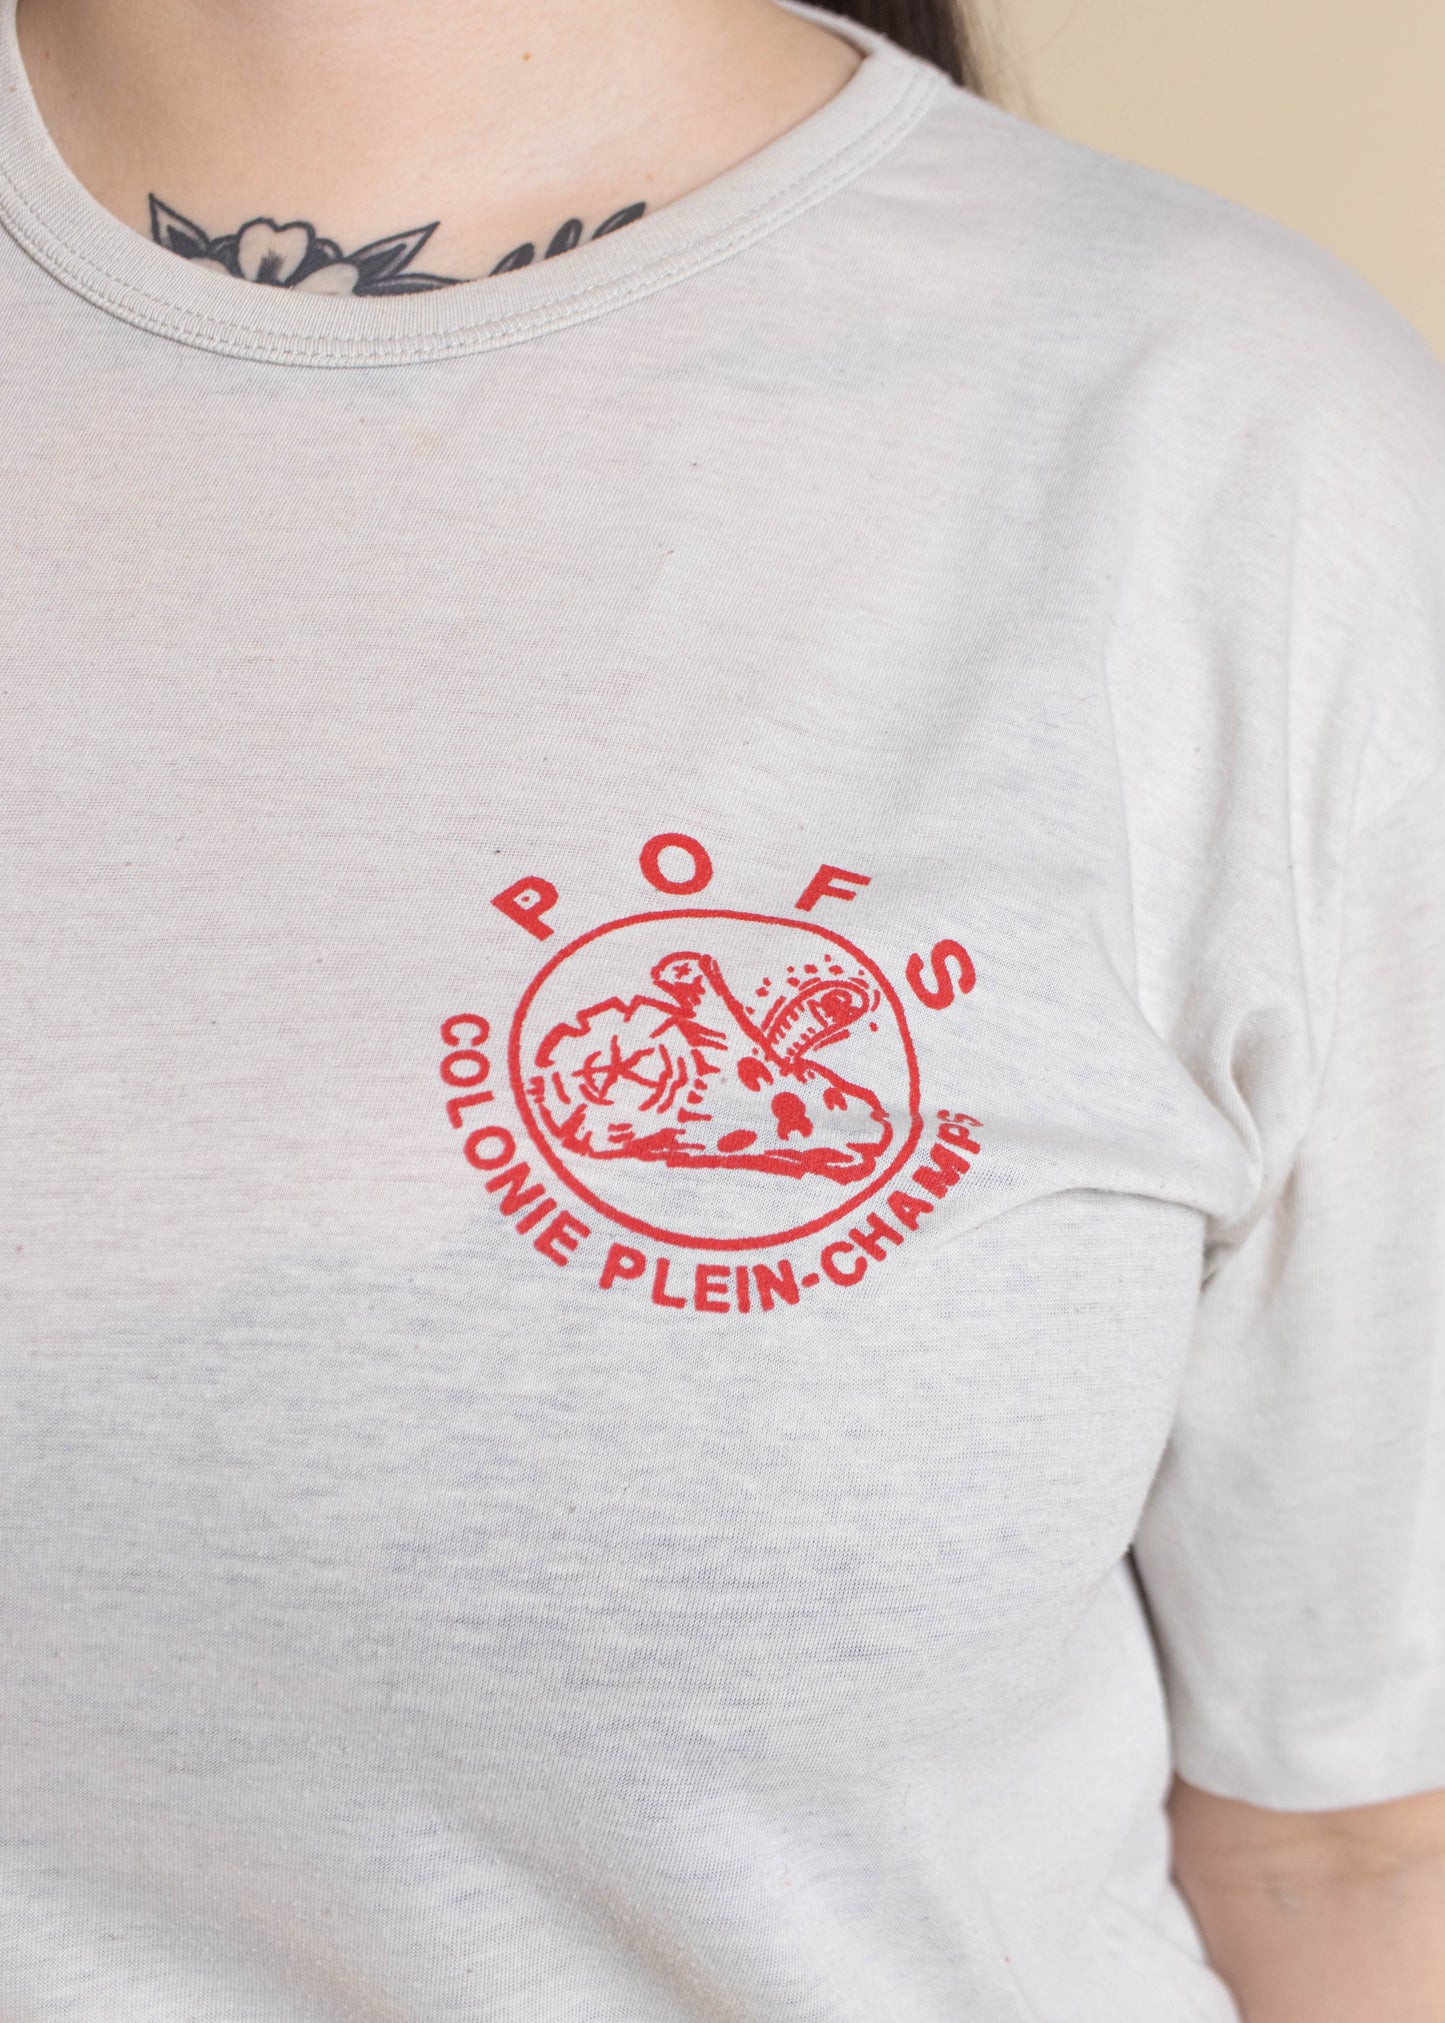 1970s POFS Colonie Plein-Champs Souvenir T-Shirt Size L/XL